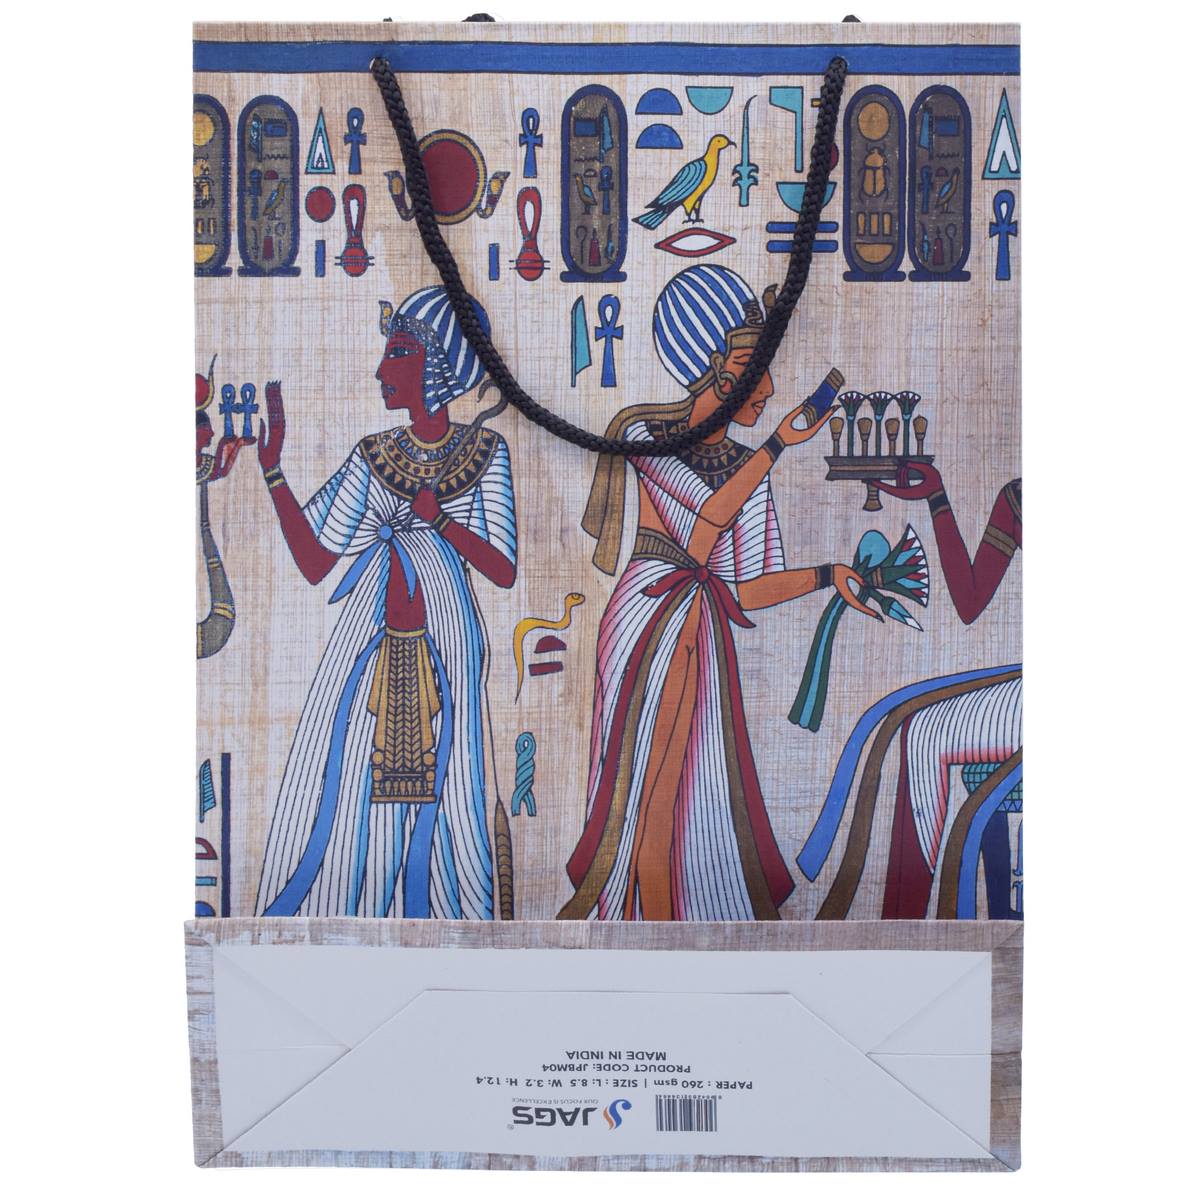 jags-mumbai Bag Jags Paper Bag Medium Egyptian painting A4 JPBM04 (PACL OF 12)